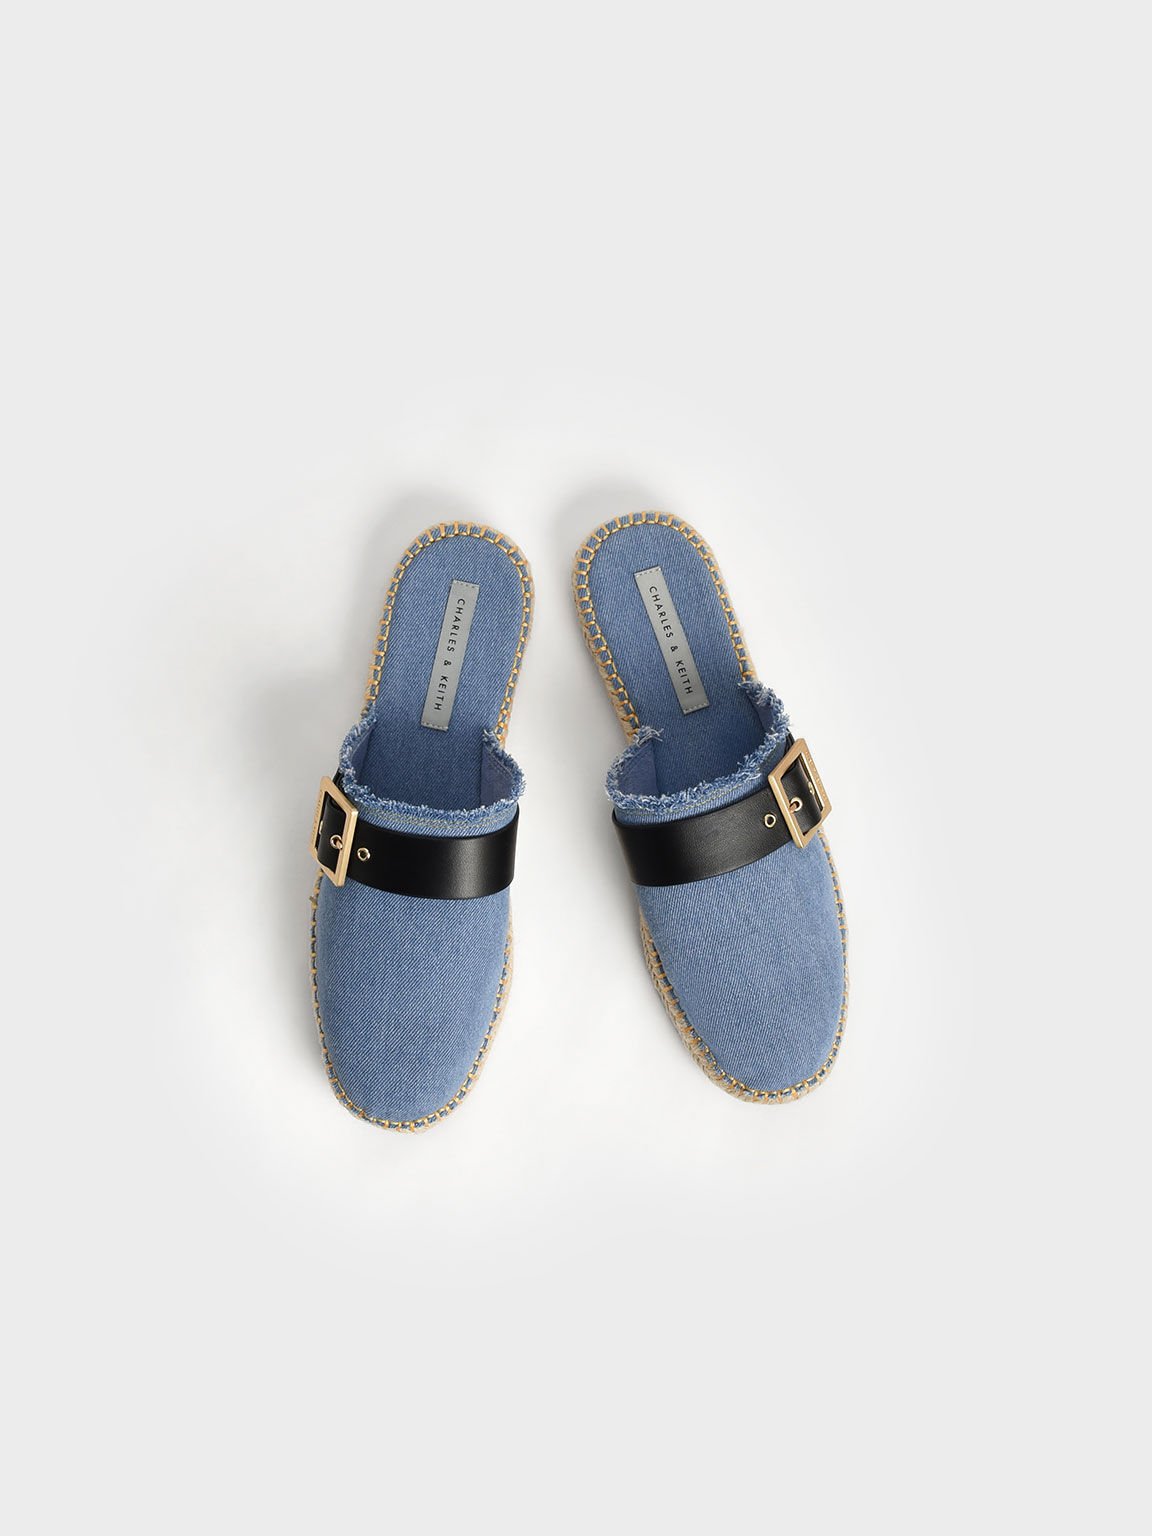 草編方釦穆勒拖鞋, 藍色, hi-res